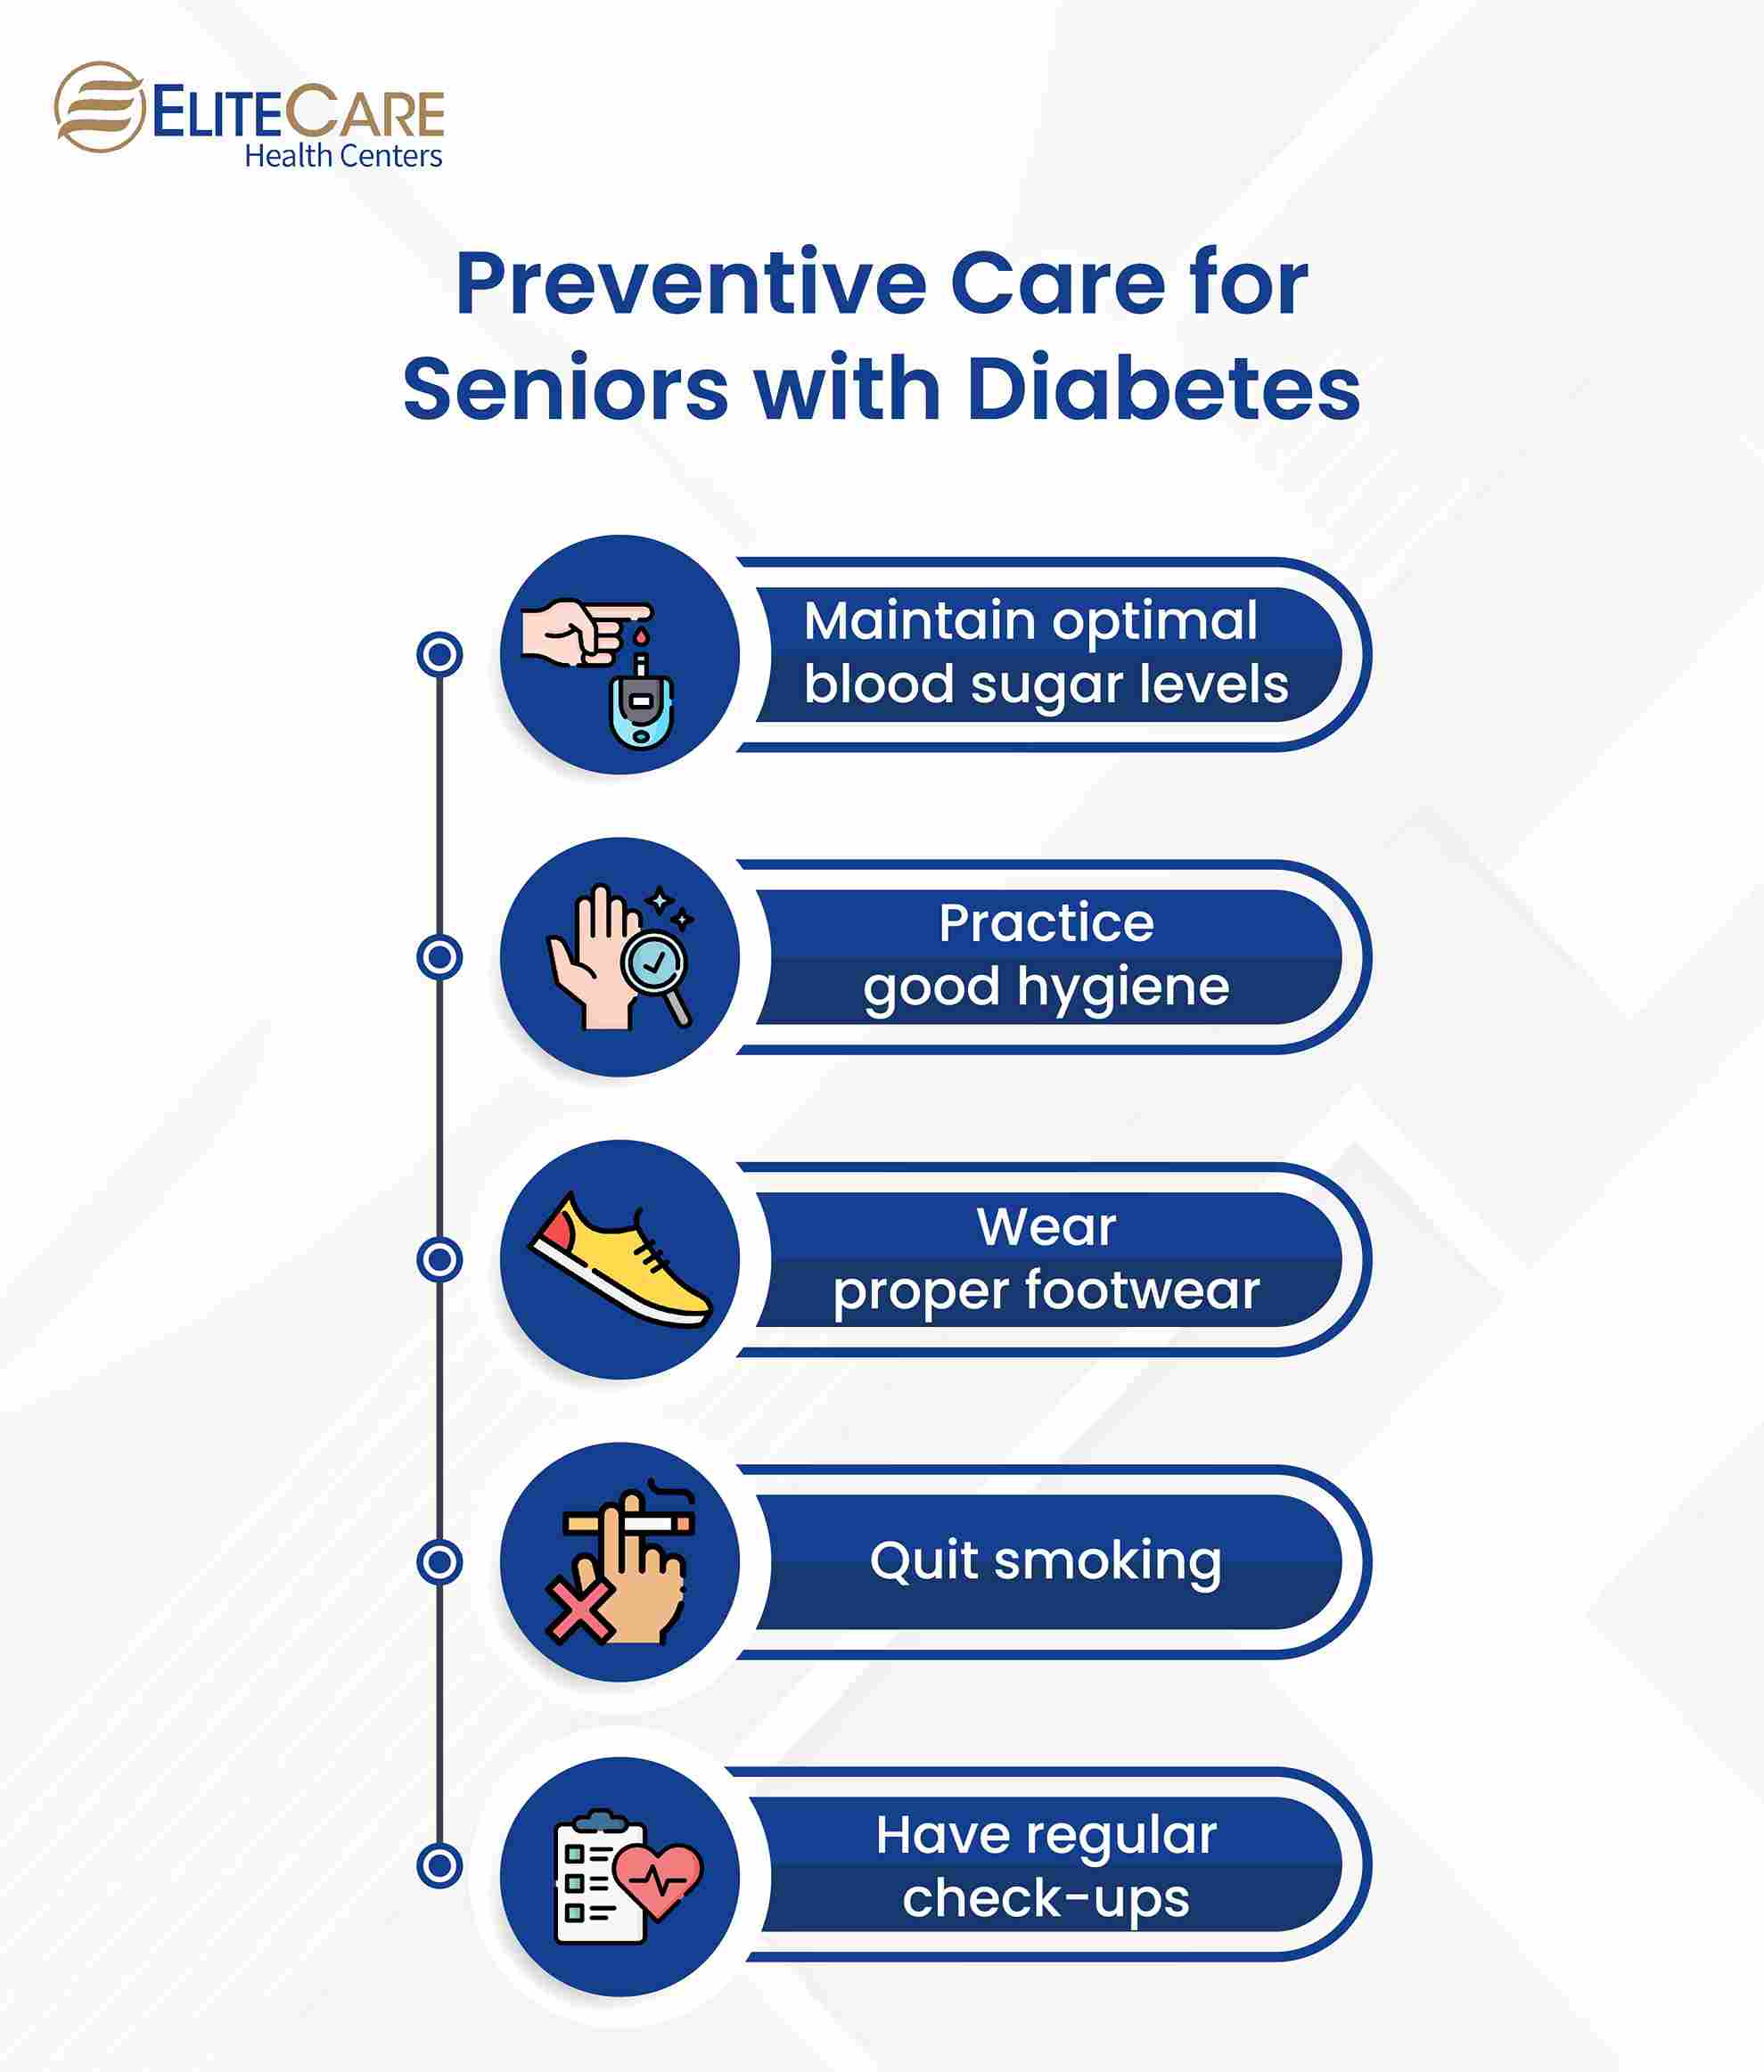 Preventive Care for Seniors with Diabetes